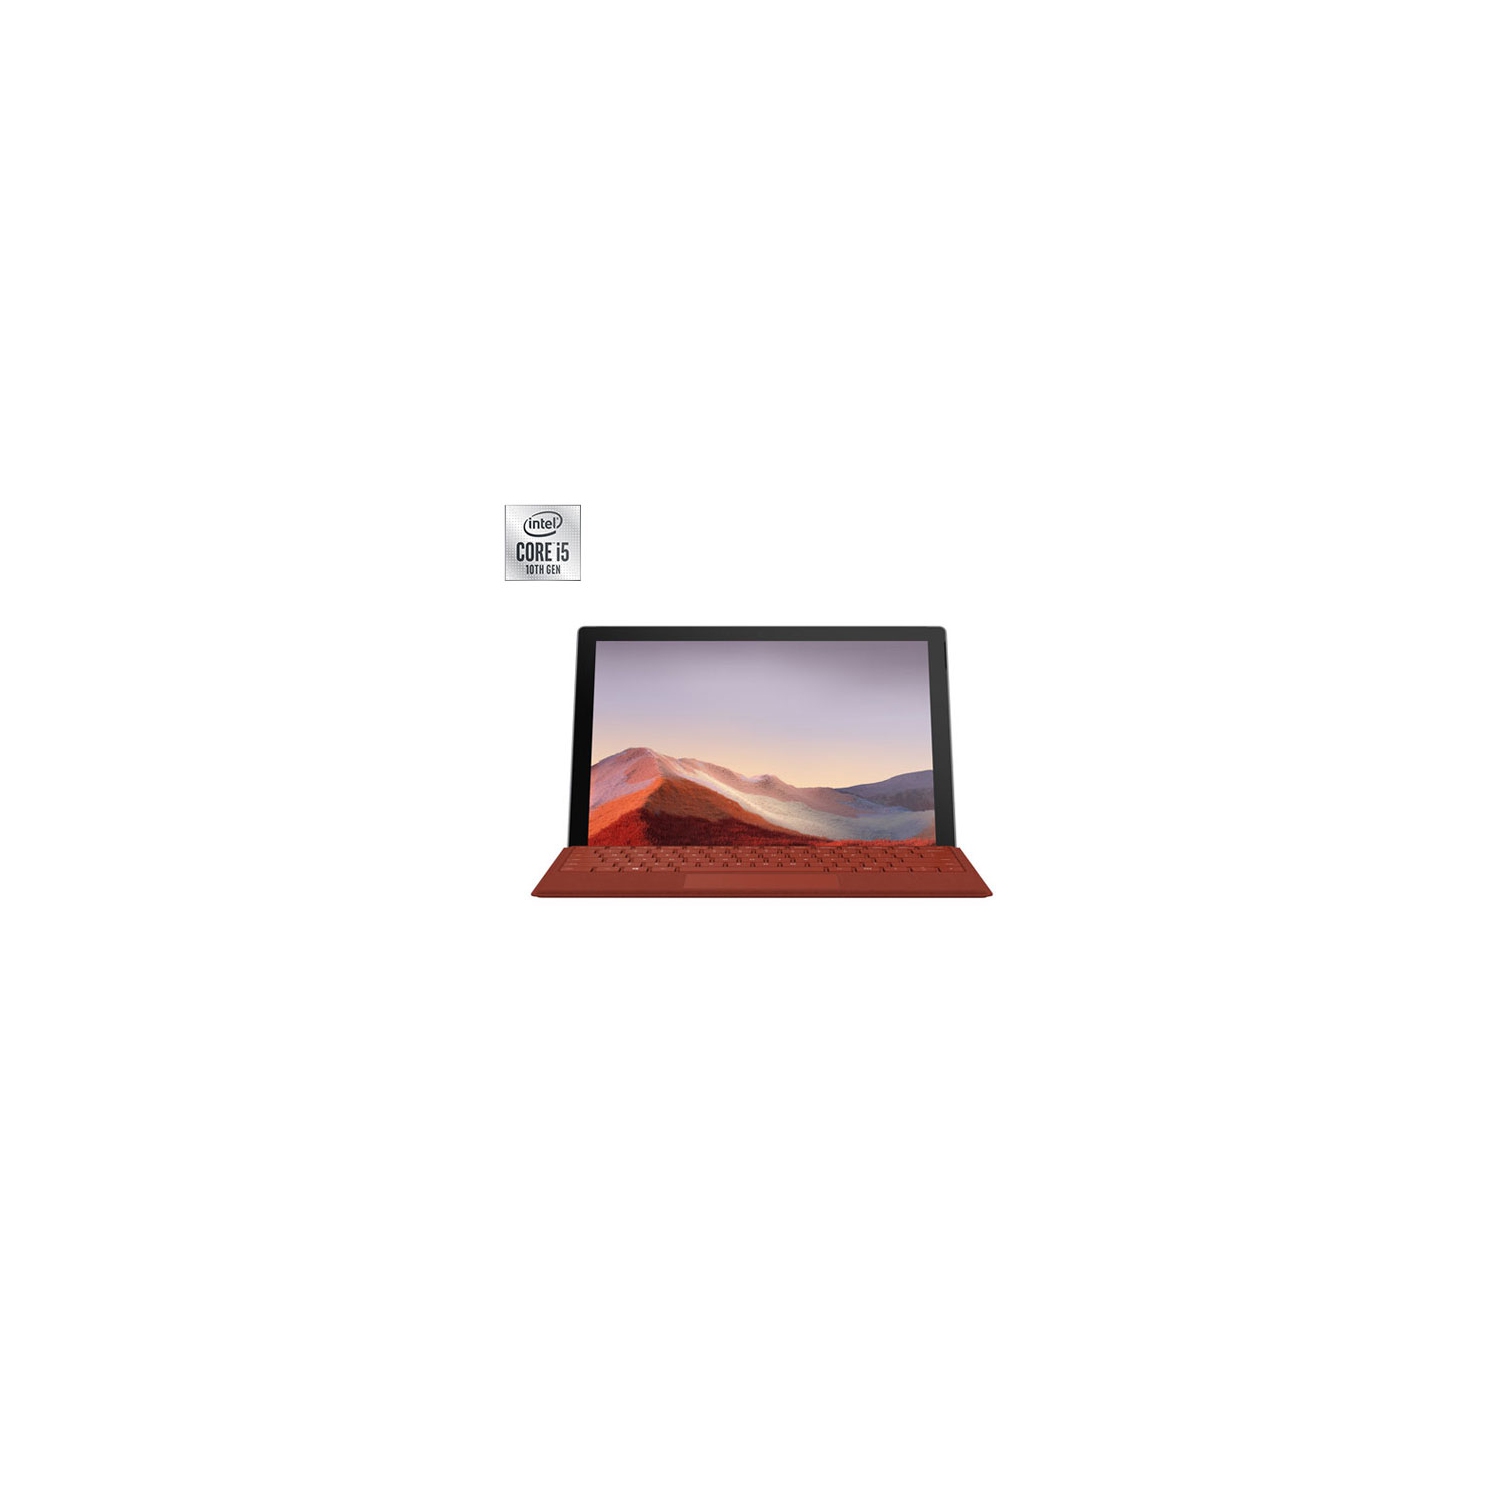 Refurbished (Fair) - Microsoft Surface Pro 7 12.3" 256 Windows 10 Tablet With 10th Gen Intel Core i5/8 RAM - Platinum